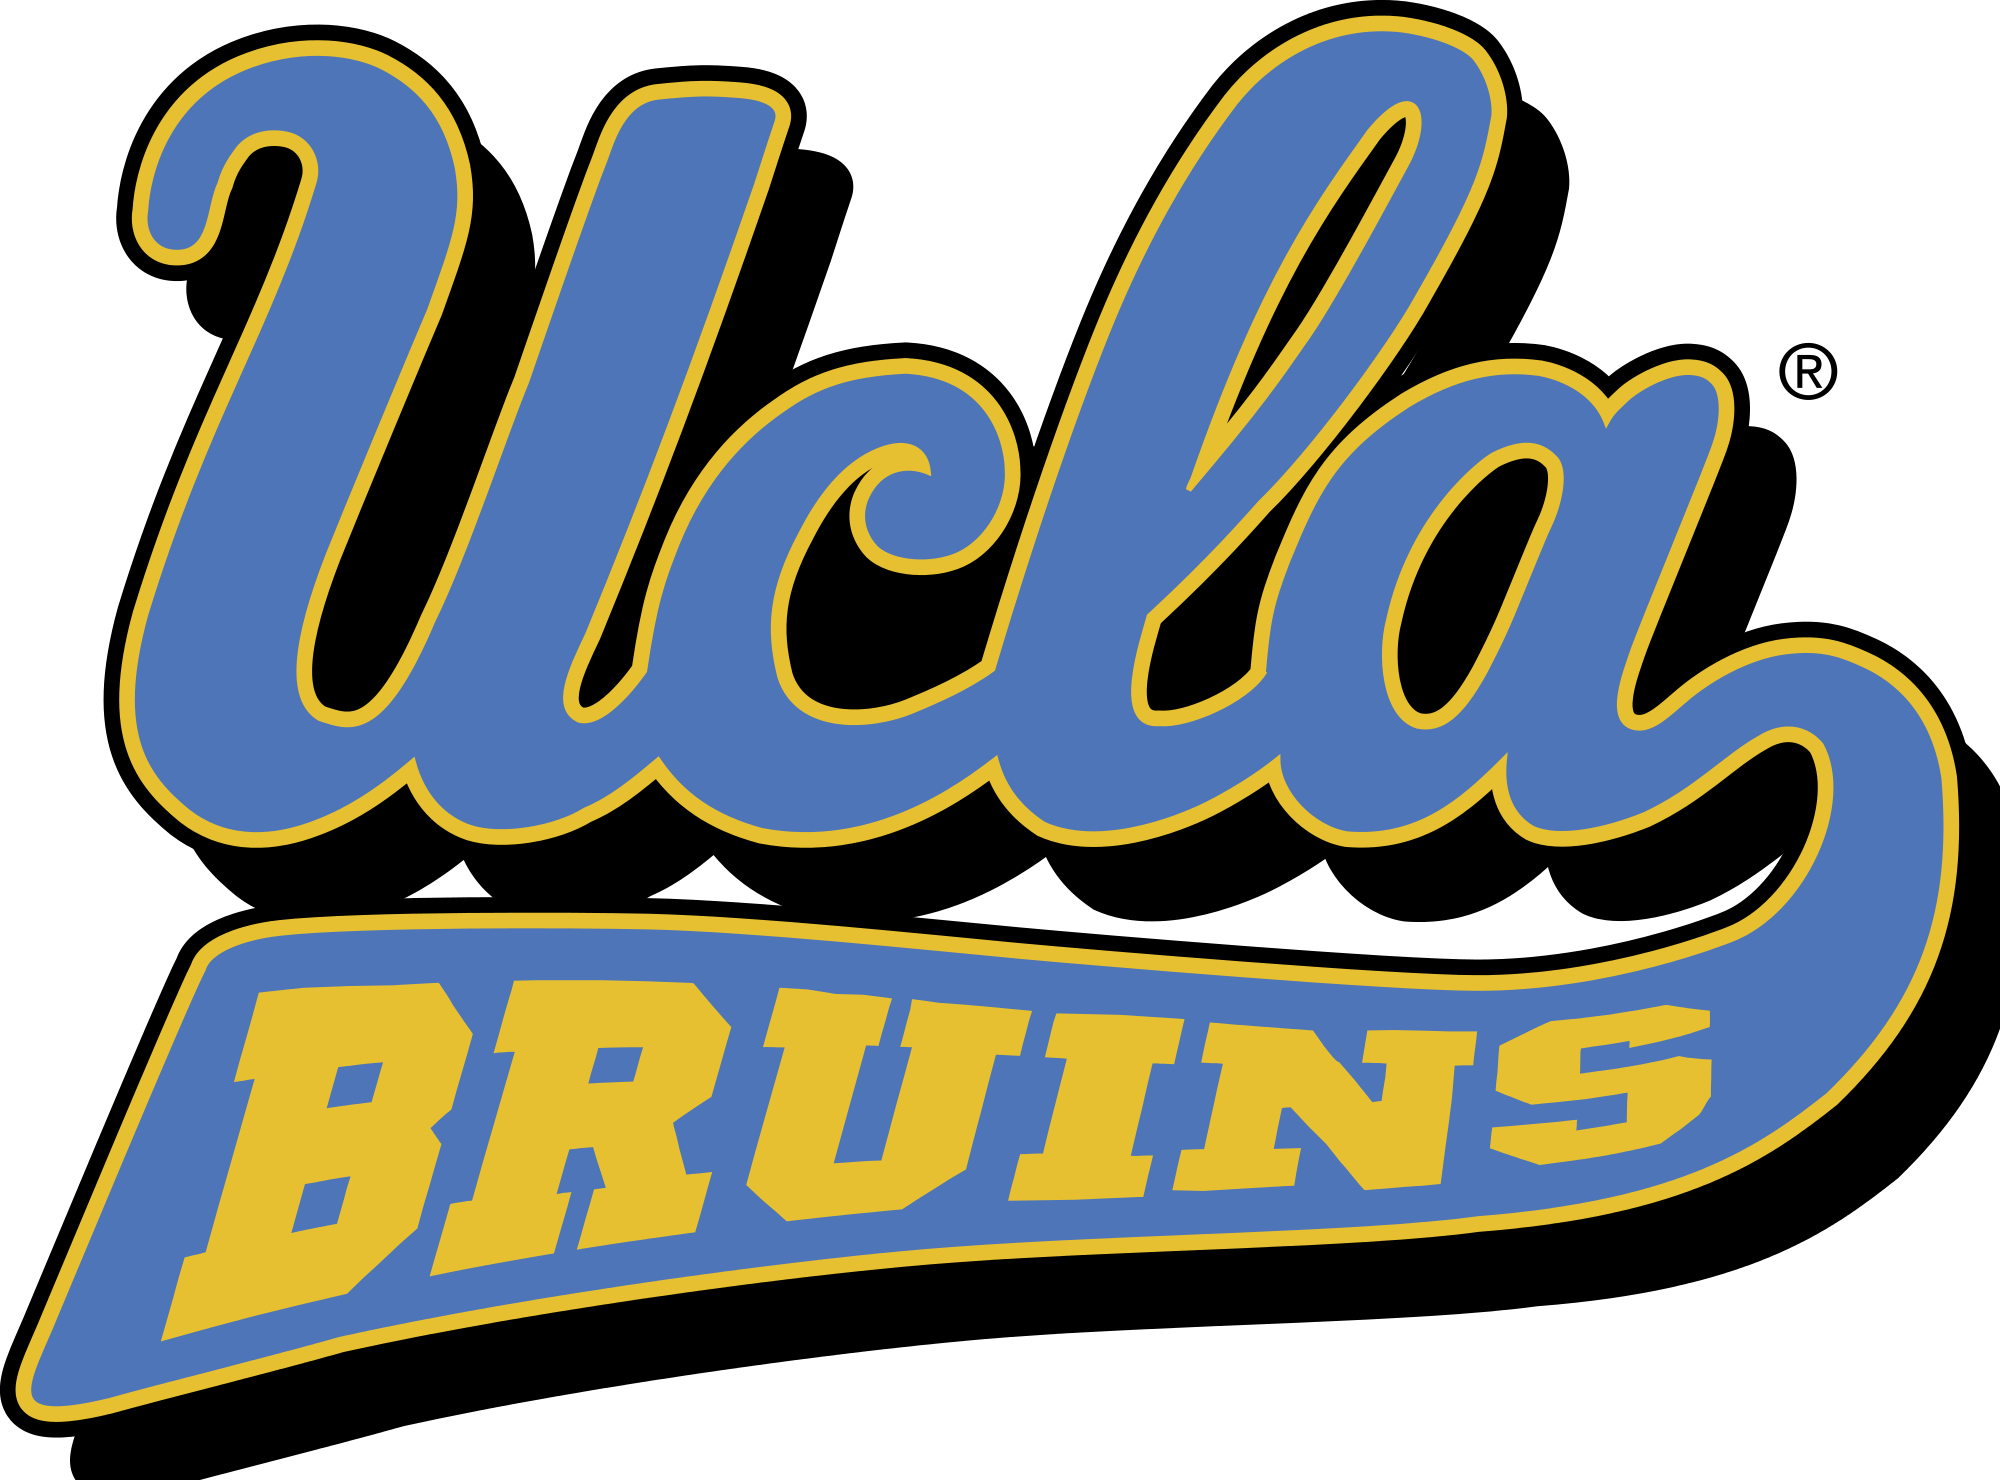 UCLA-Football-Encyclopedia